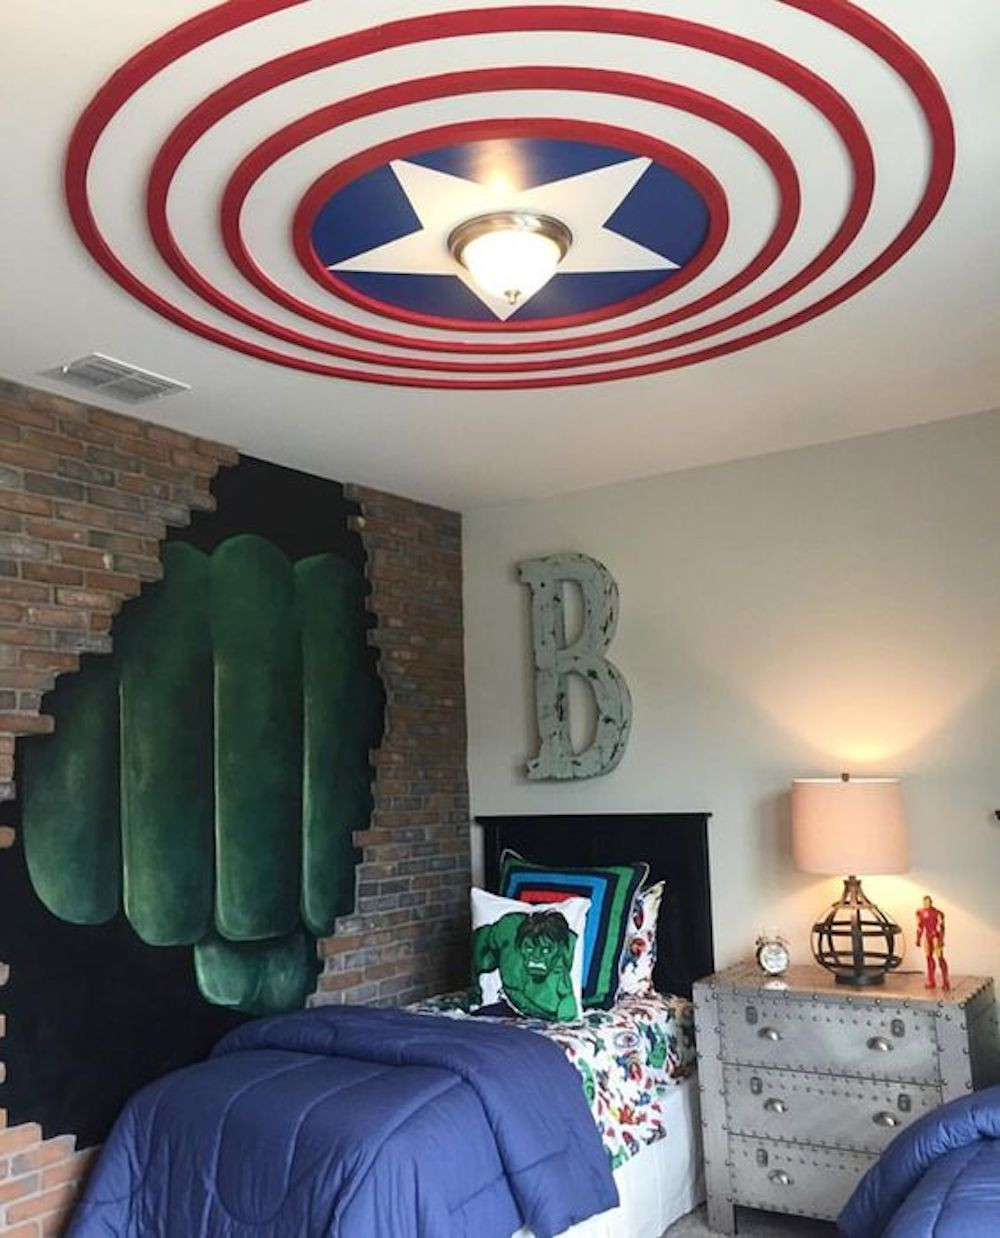 Superheroes Bedroom Decor Best Of 22 Spectacular Superhero Bedroom Ideas for Kids